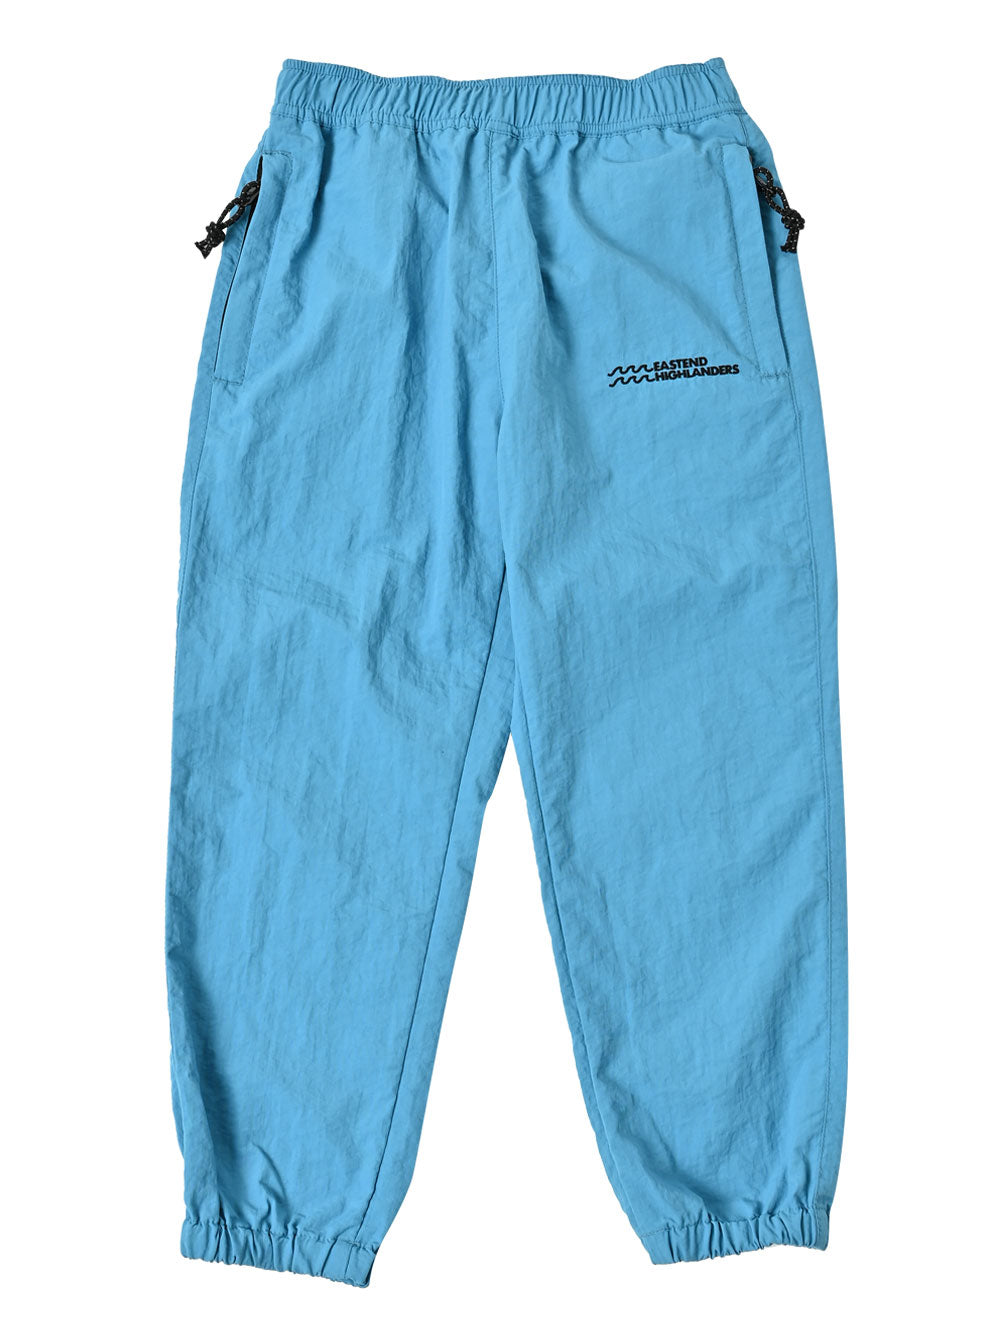 Turquoise Jogging Pants